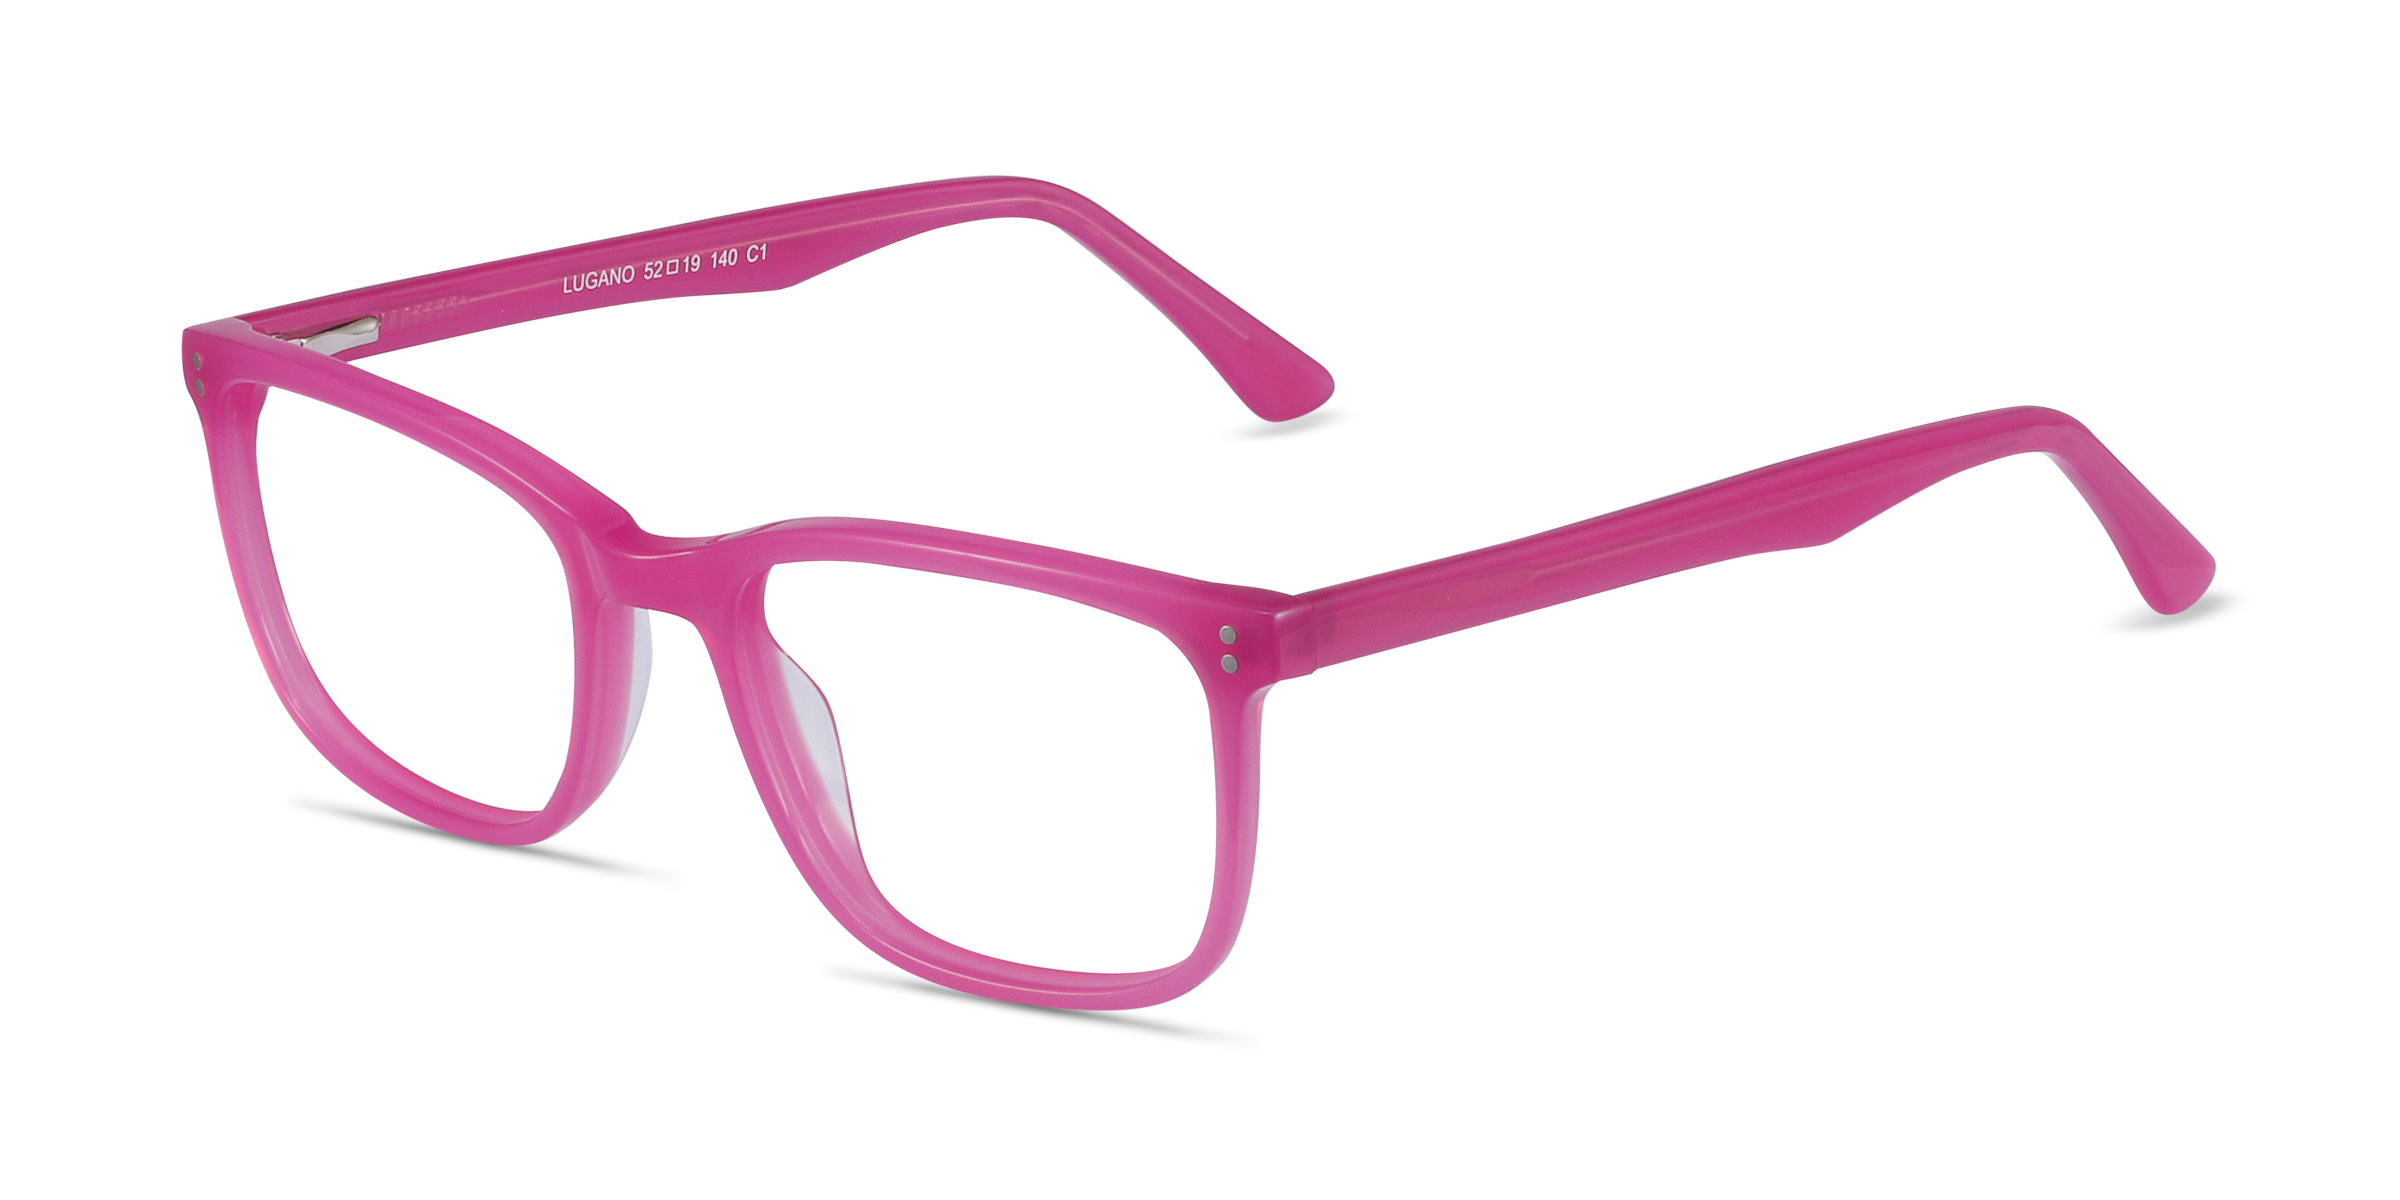 Lugano Rectangle Fuchsia Pink Glasses For Women Eyebuydirect Canada